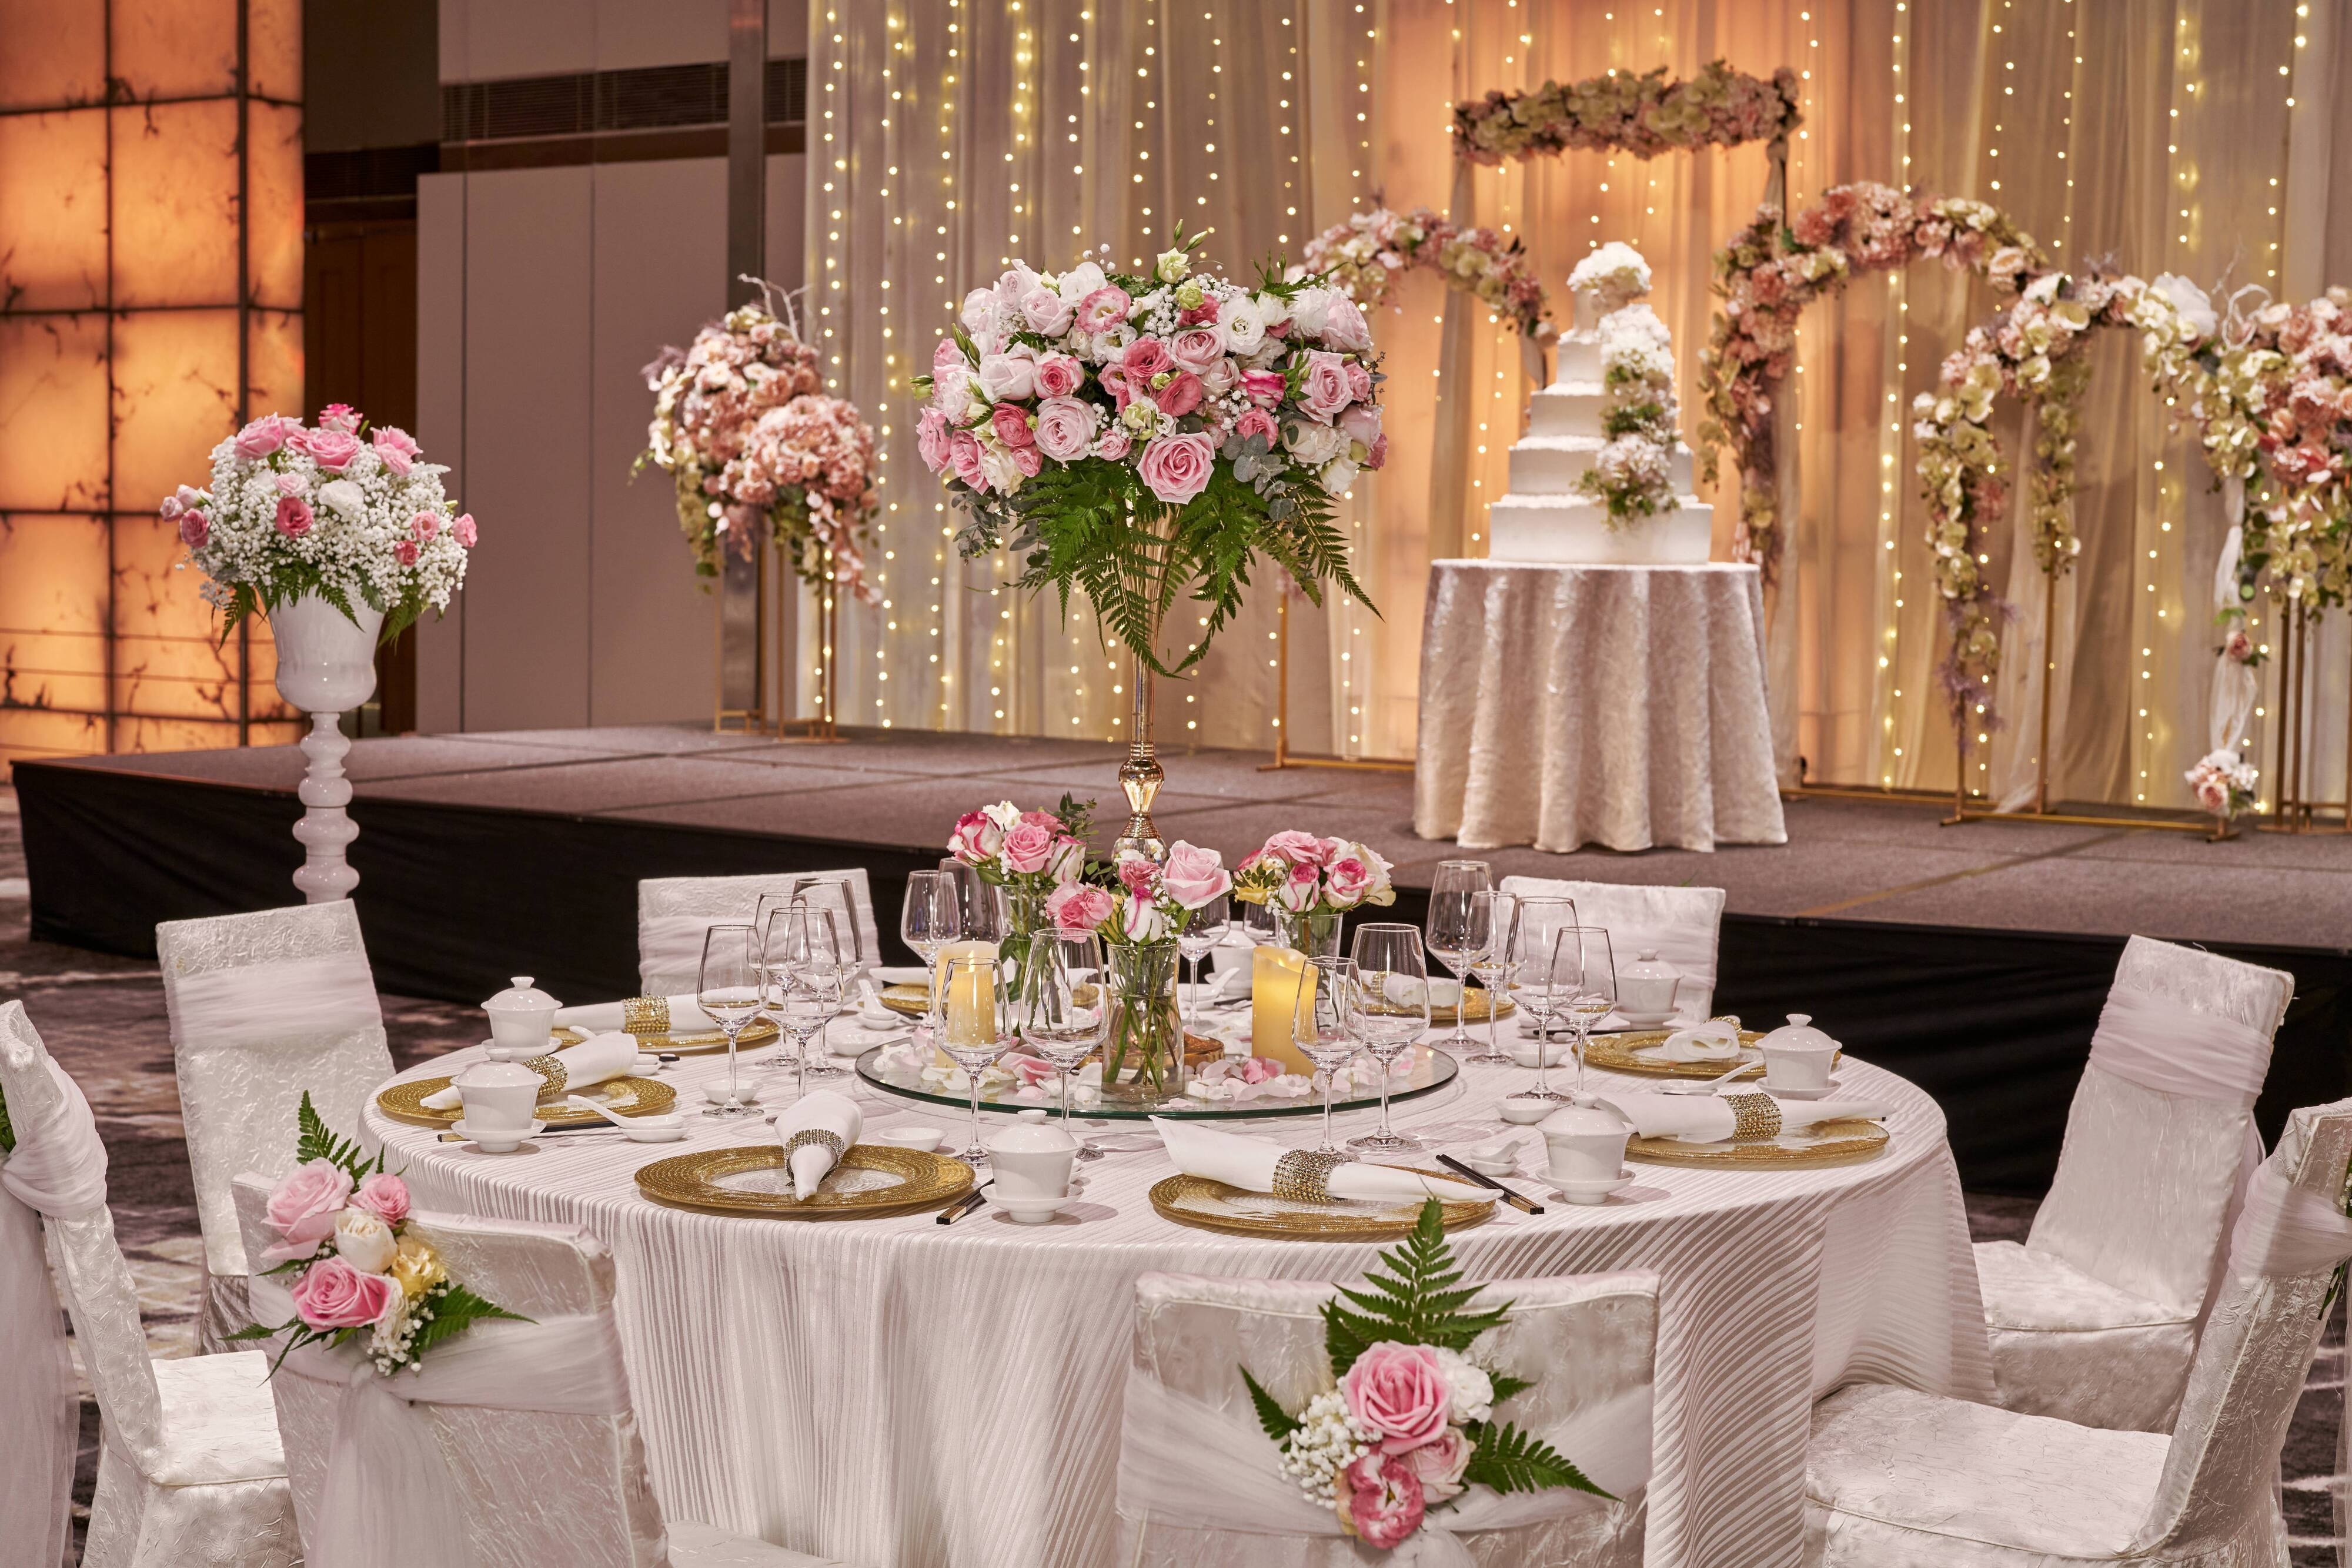 Ballroom with a Wedding Cake Set